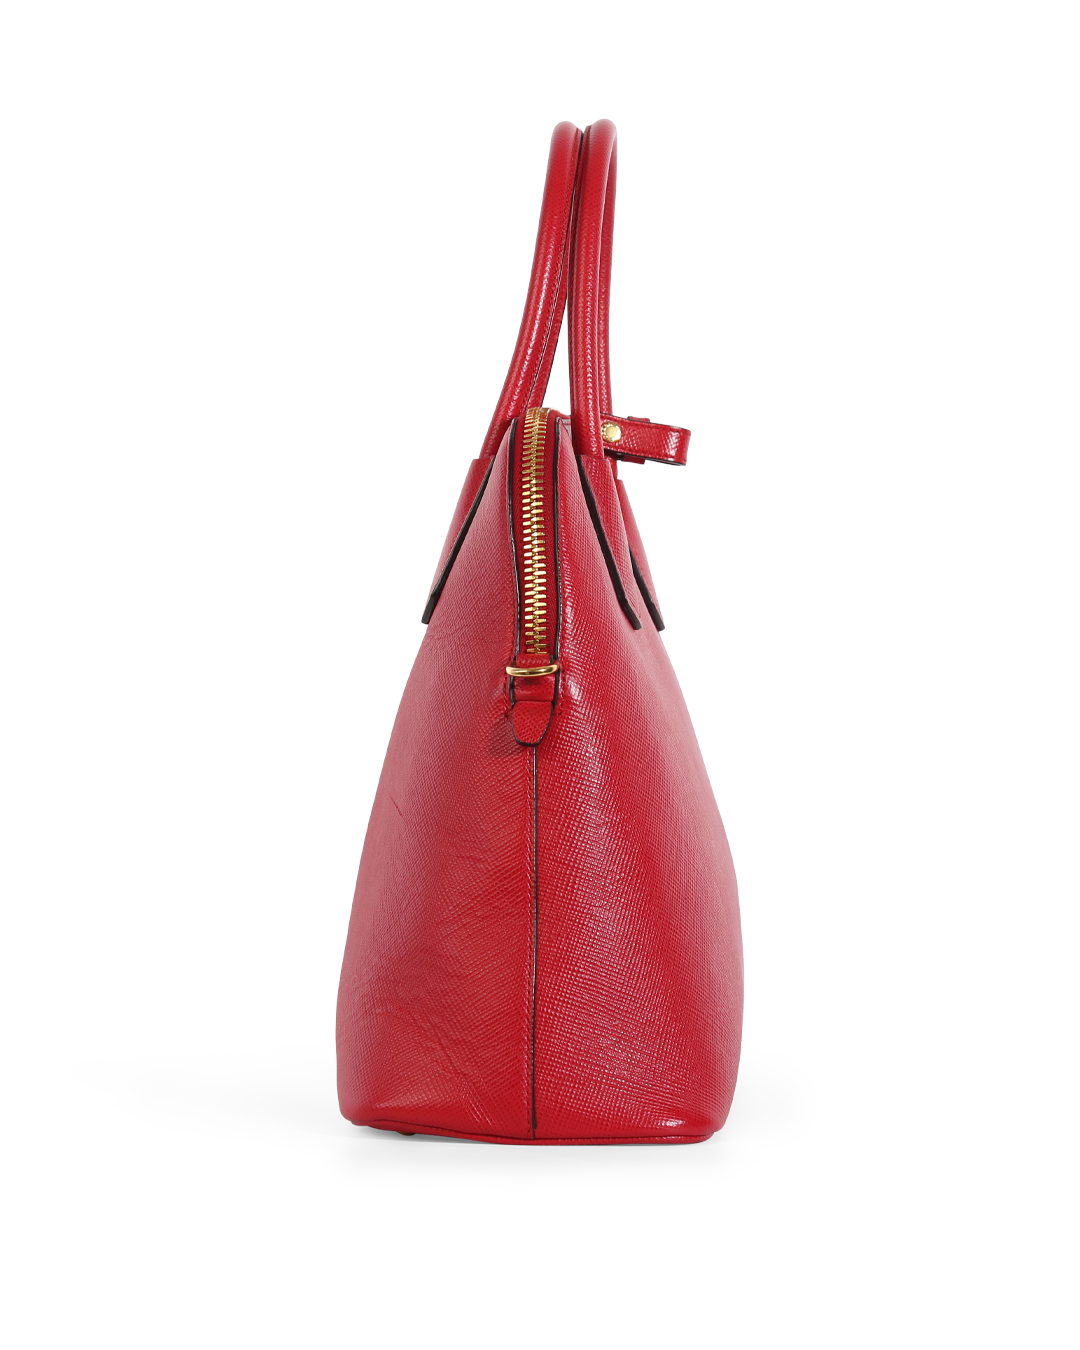 Prada Red Saffiano Leather Medium Dome Satchel Bag